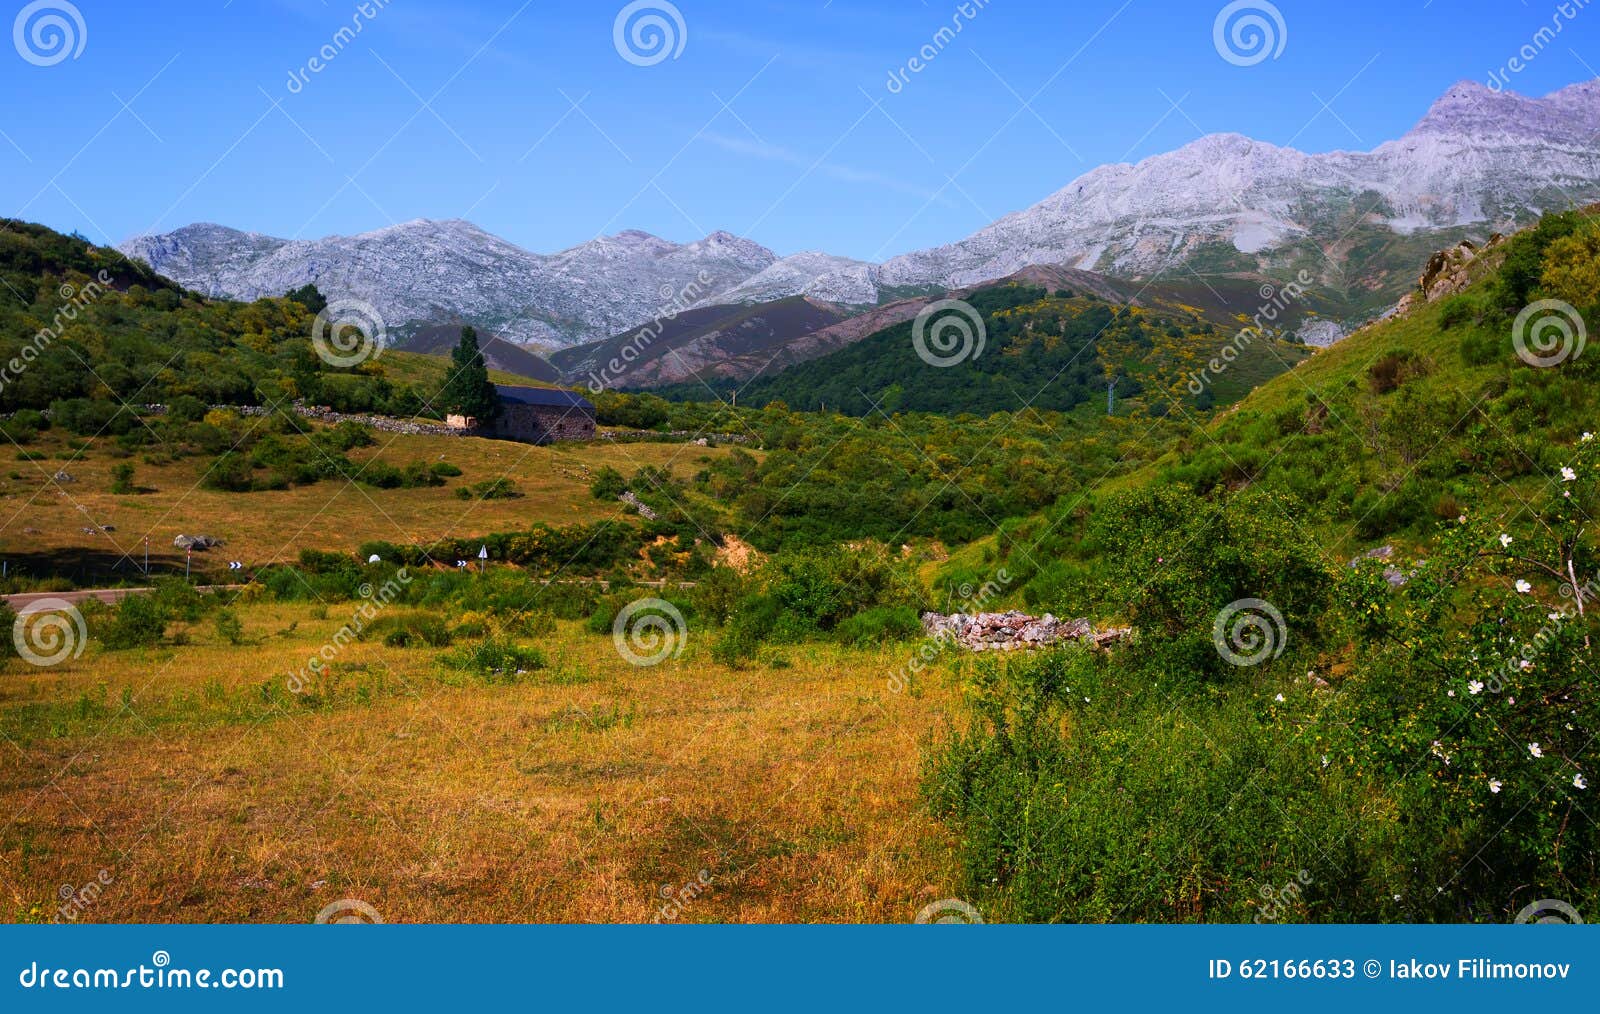 tranquil mountain landscape